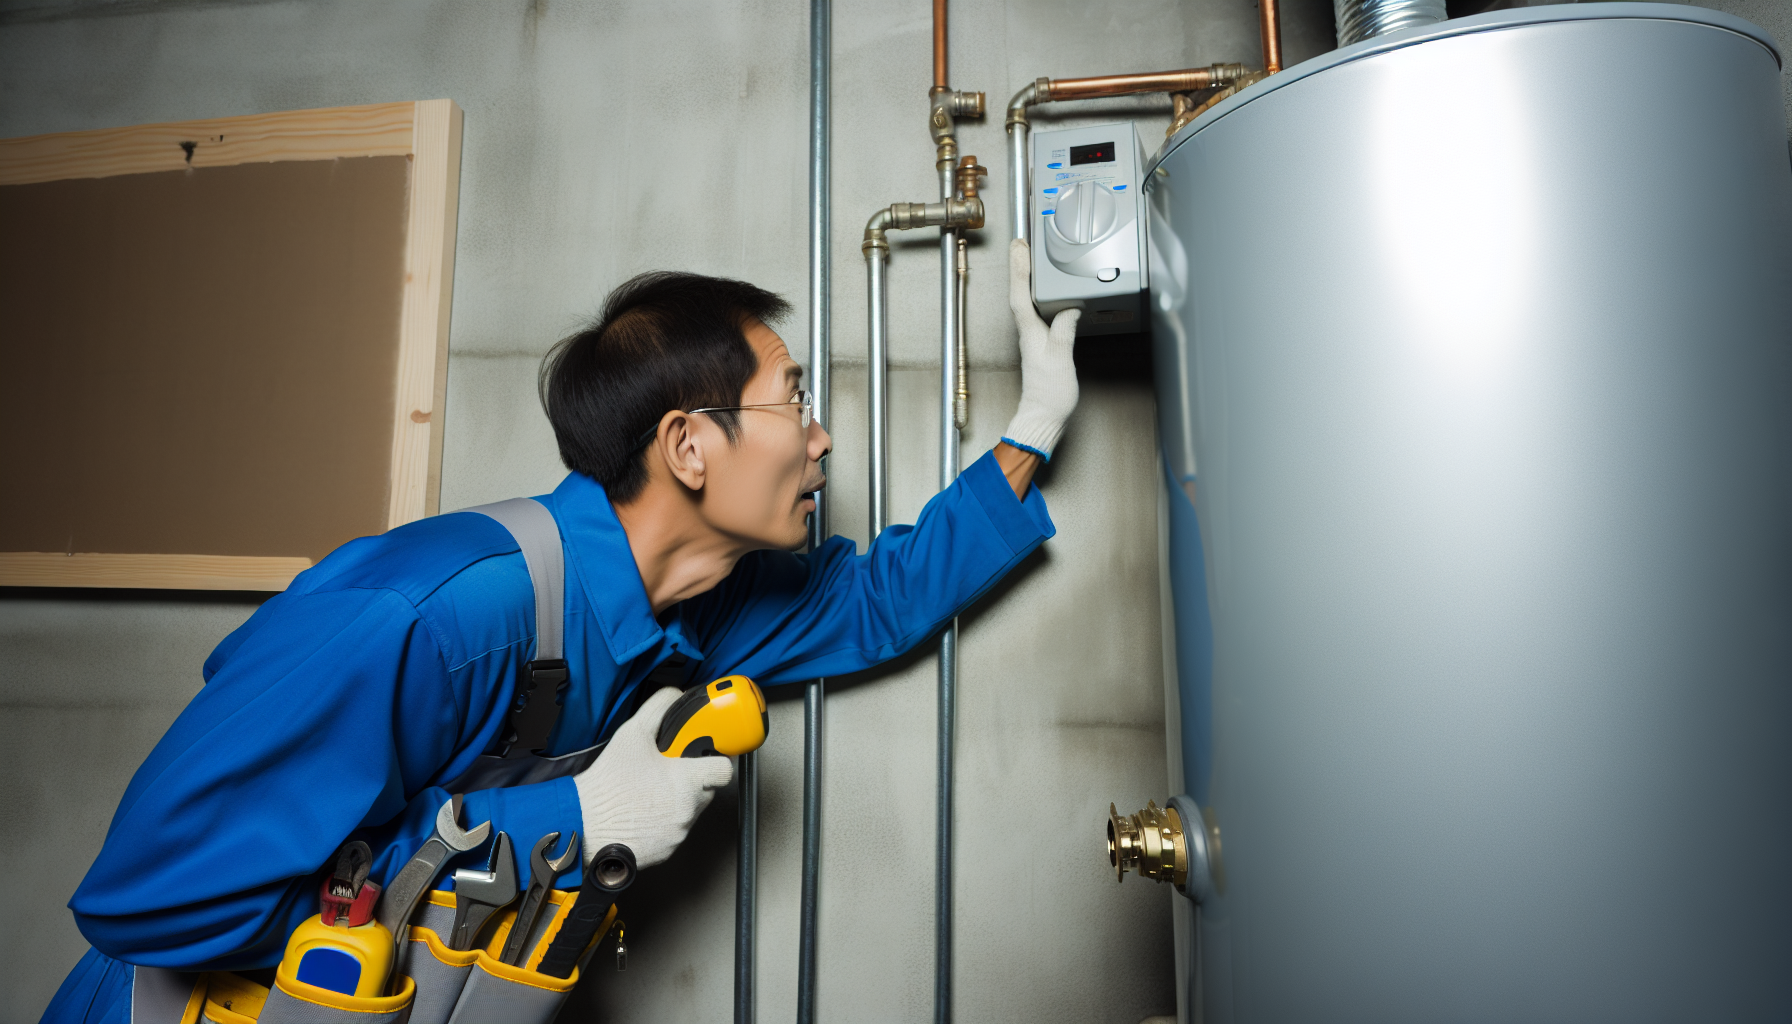 Plumber inspecting a hot water heater